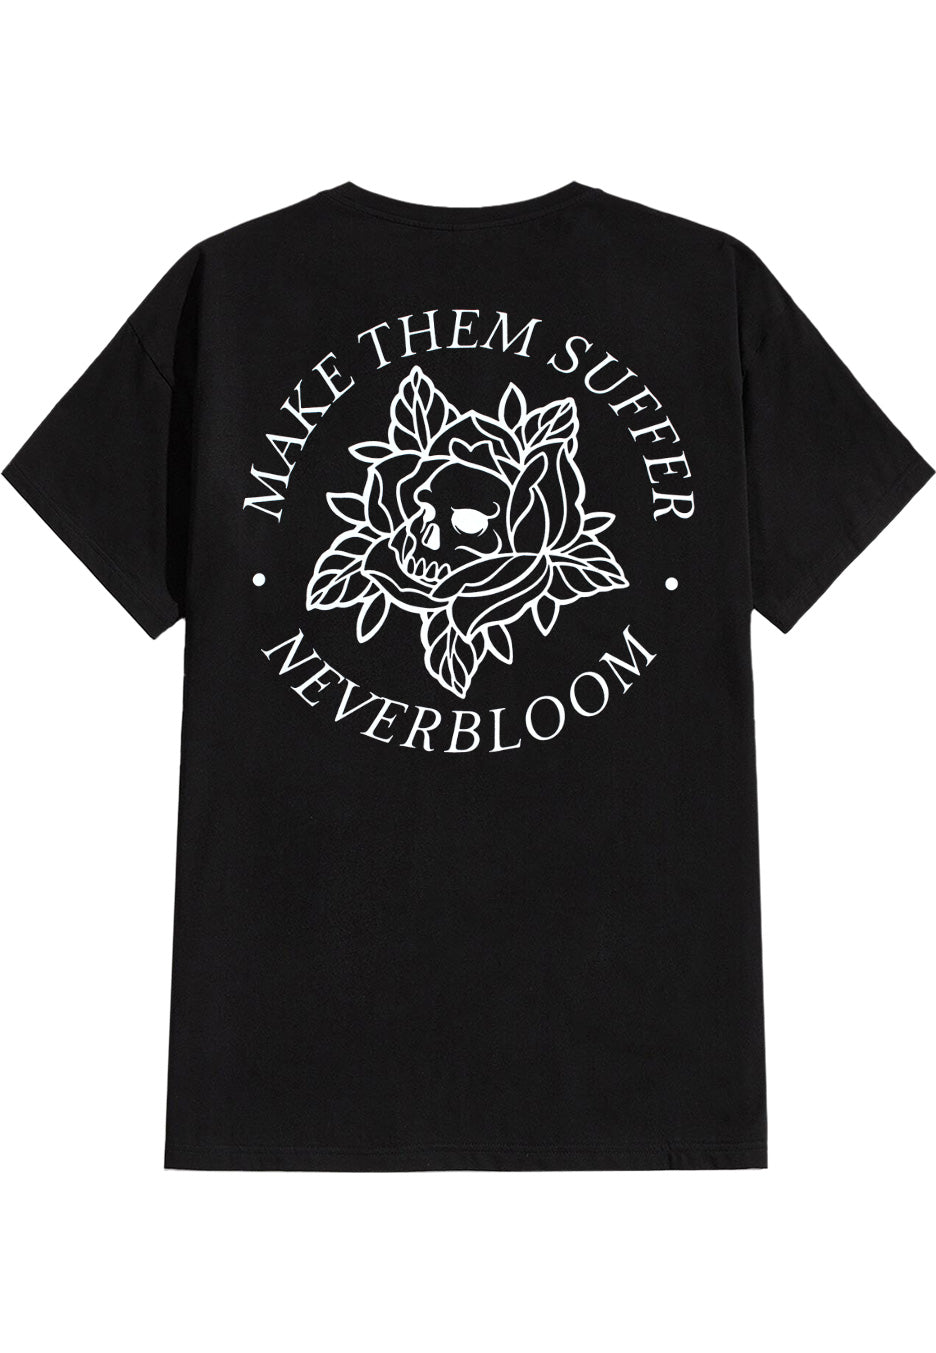 Make Them Suffer - Neverbloom Anniversary - T-Shirt